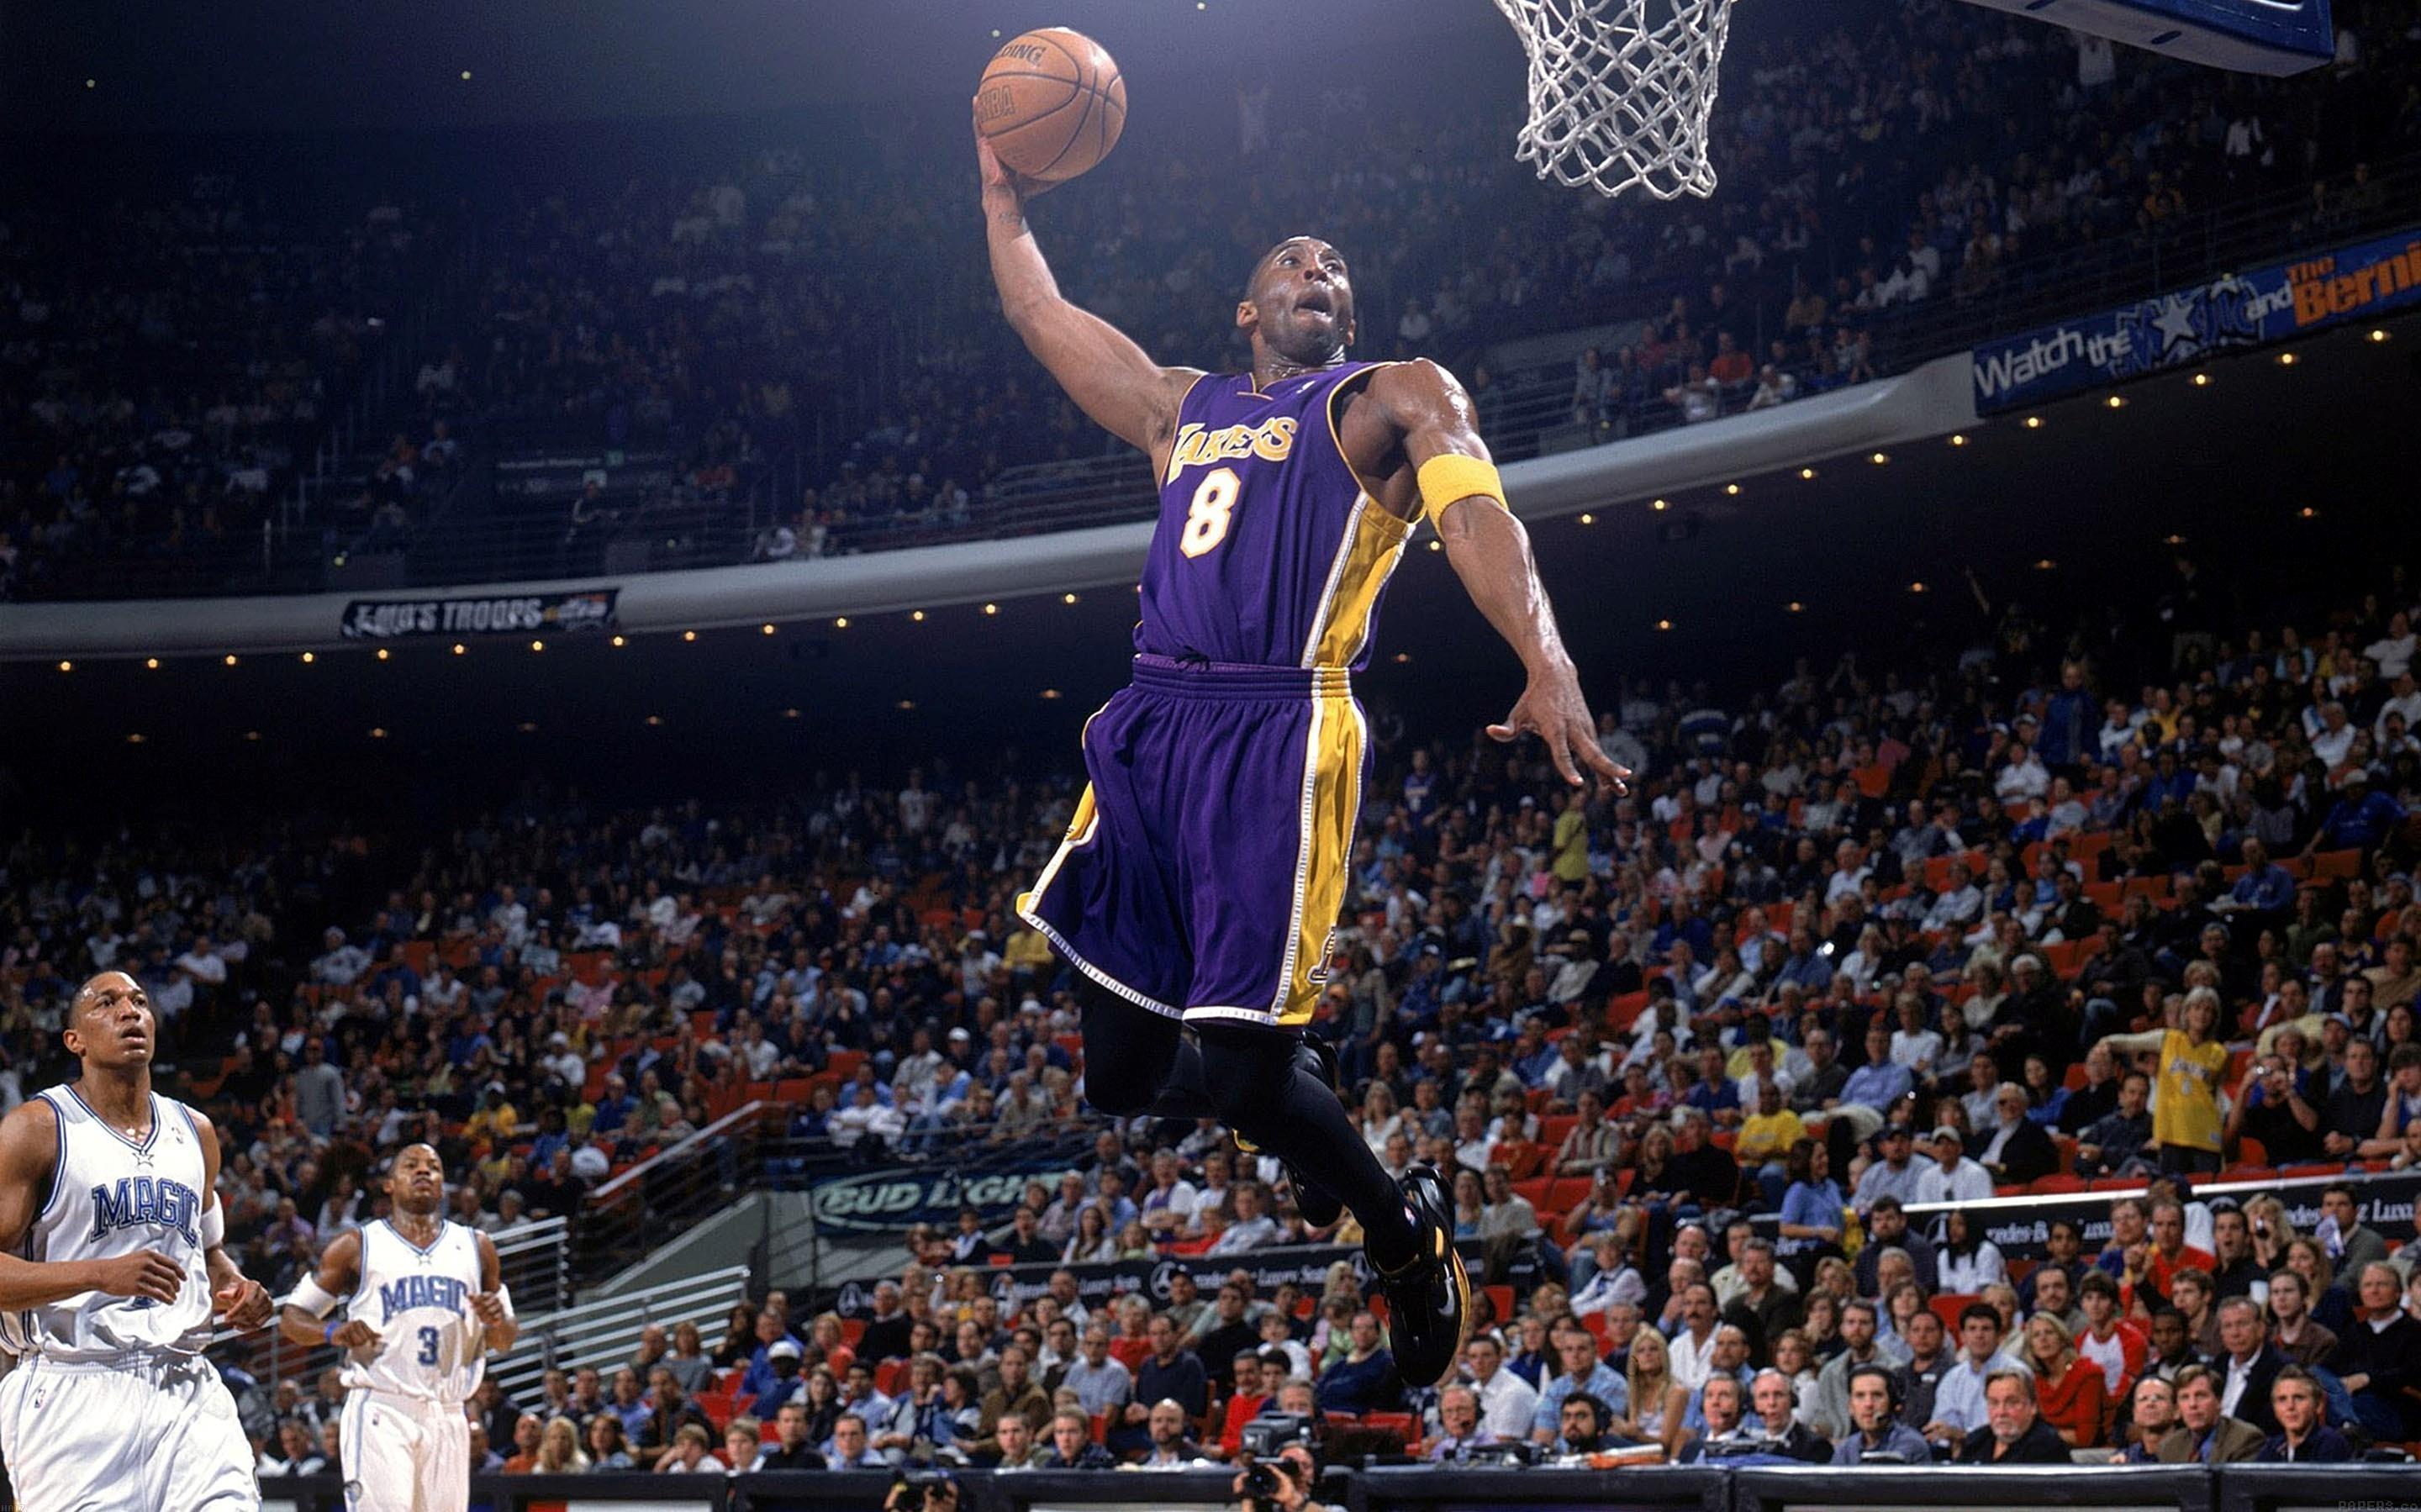 Sports Kobe Bryant HD Wallpaper